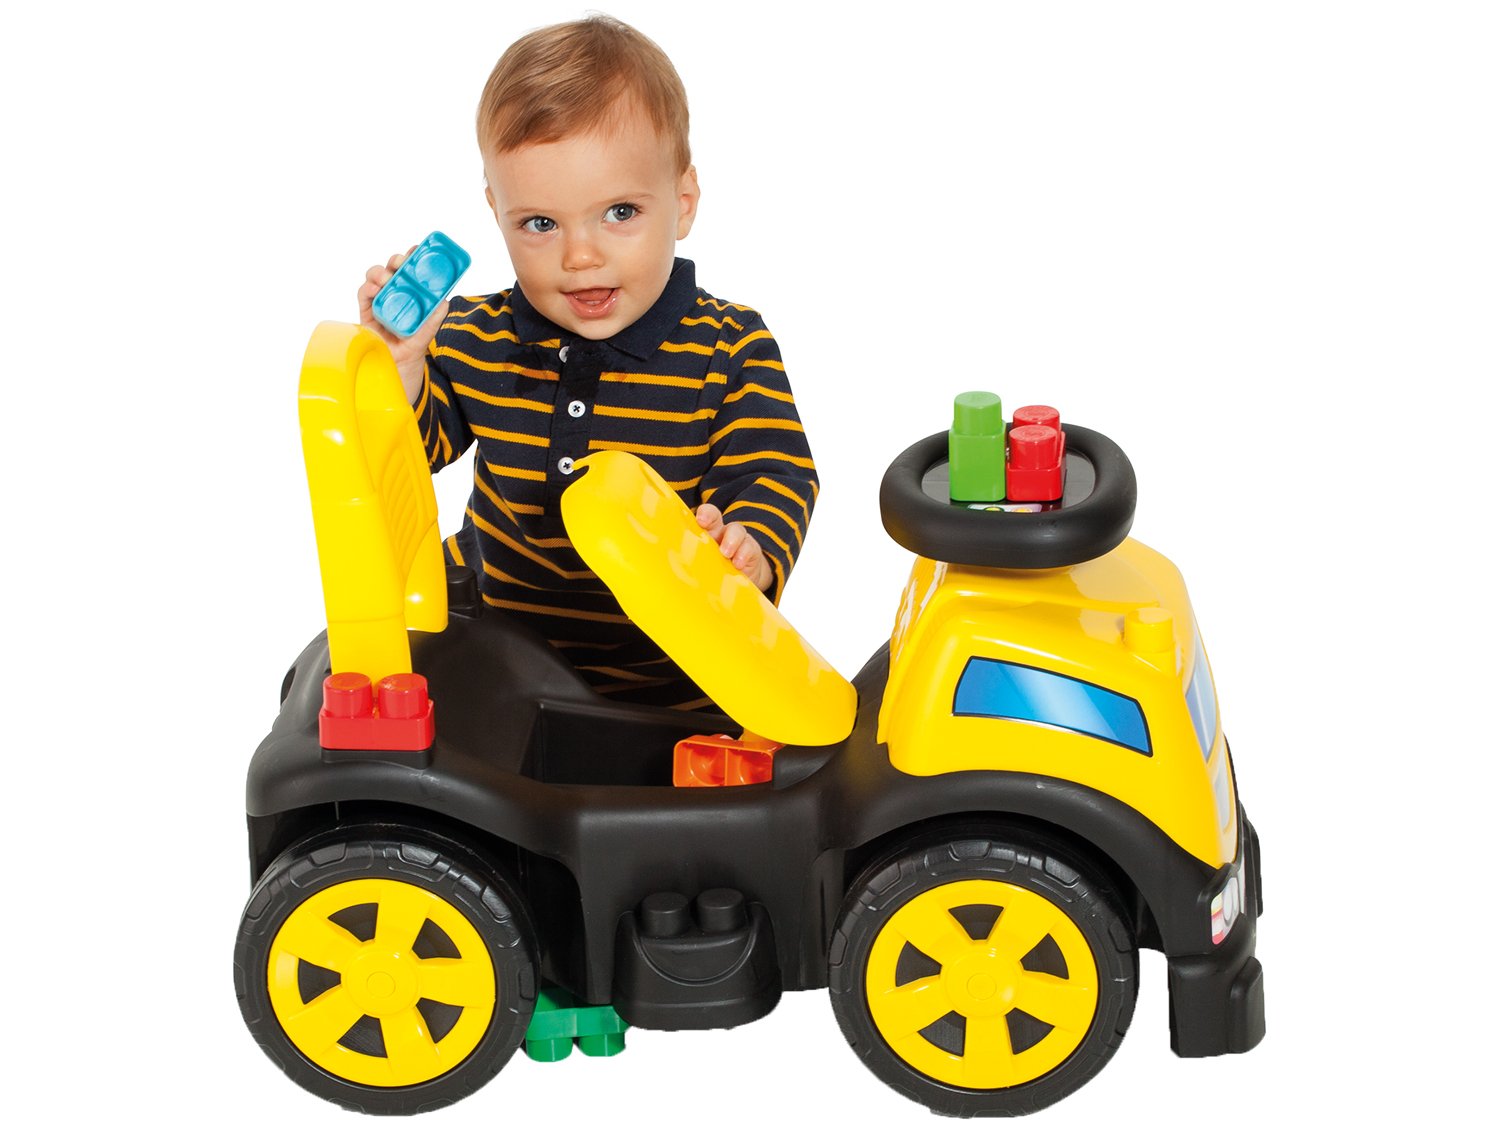 Andador Infantil - Baby Land Blocks Truck Ride on Menino Cardoso Toys - 2